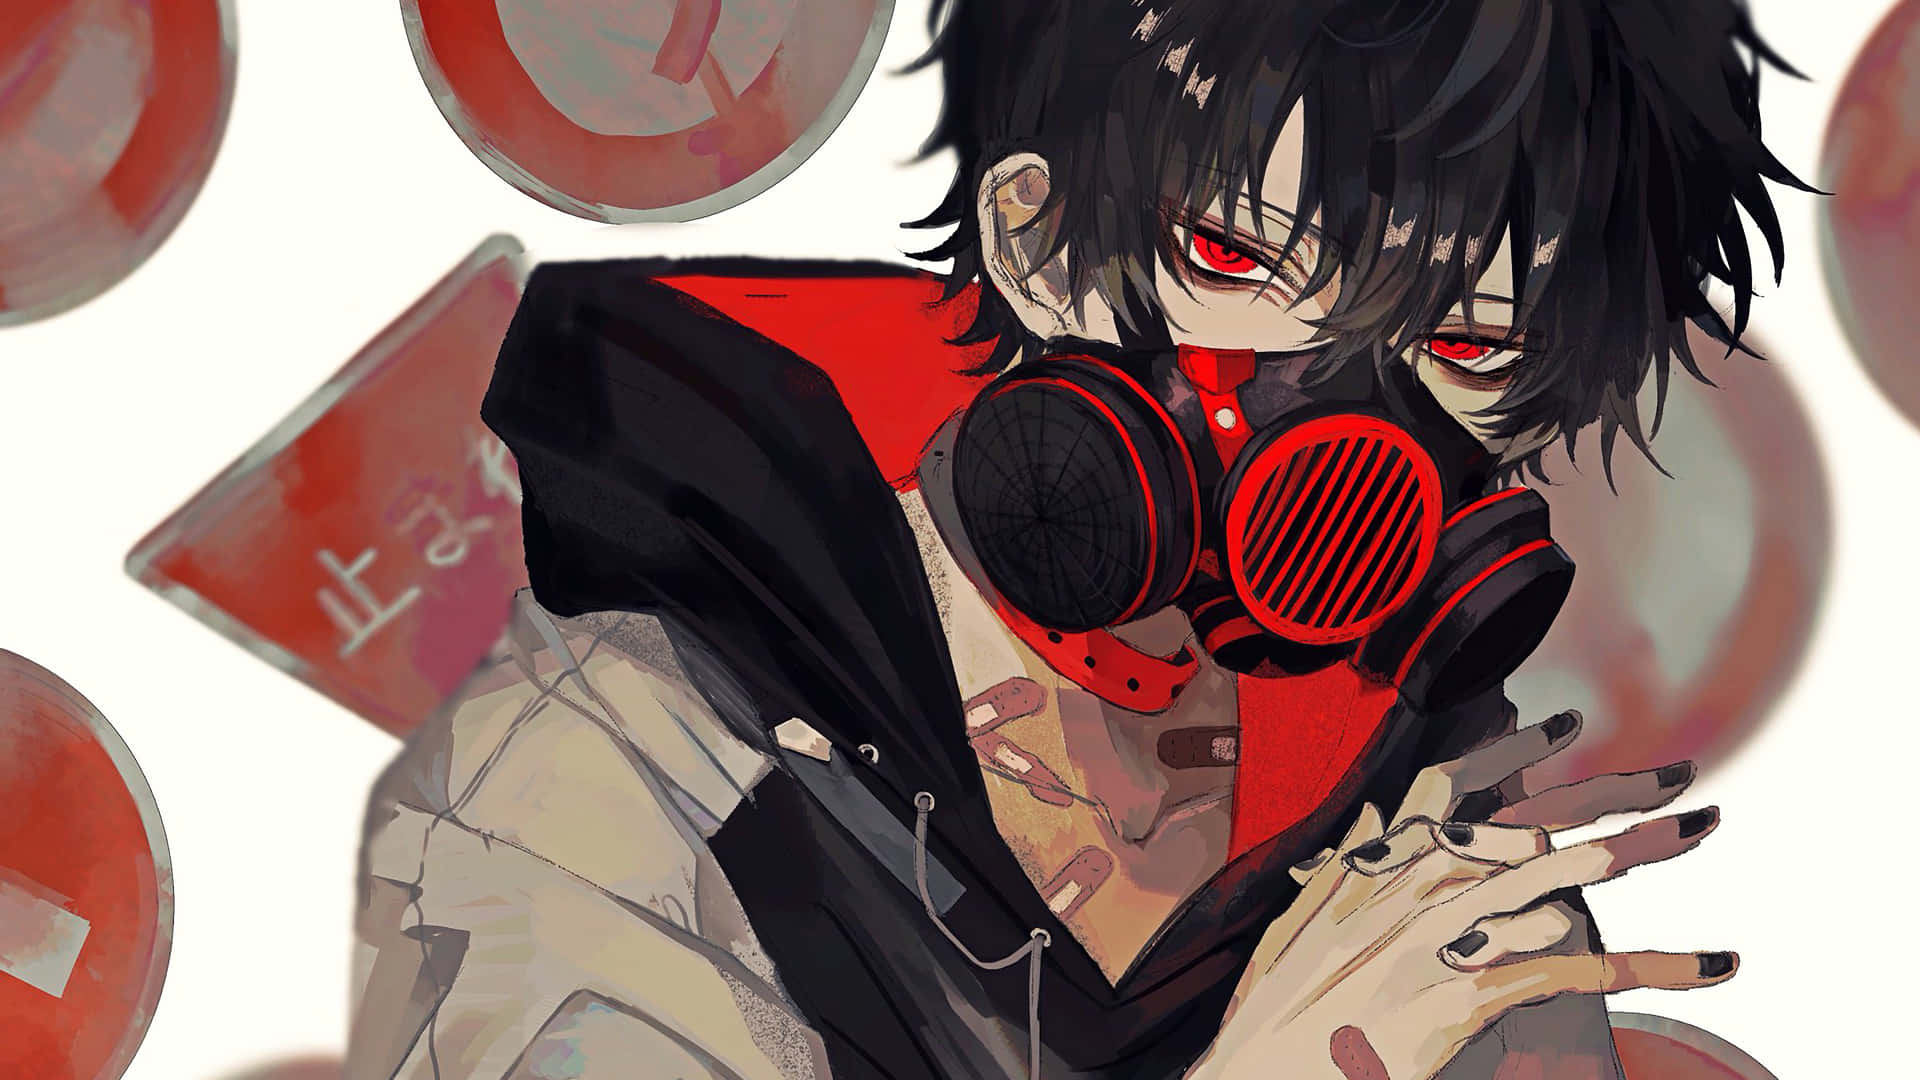 Hot Gas Mask Boy Anime Red & Black Background